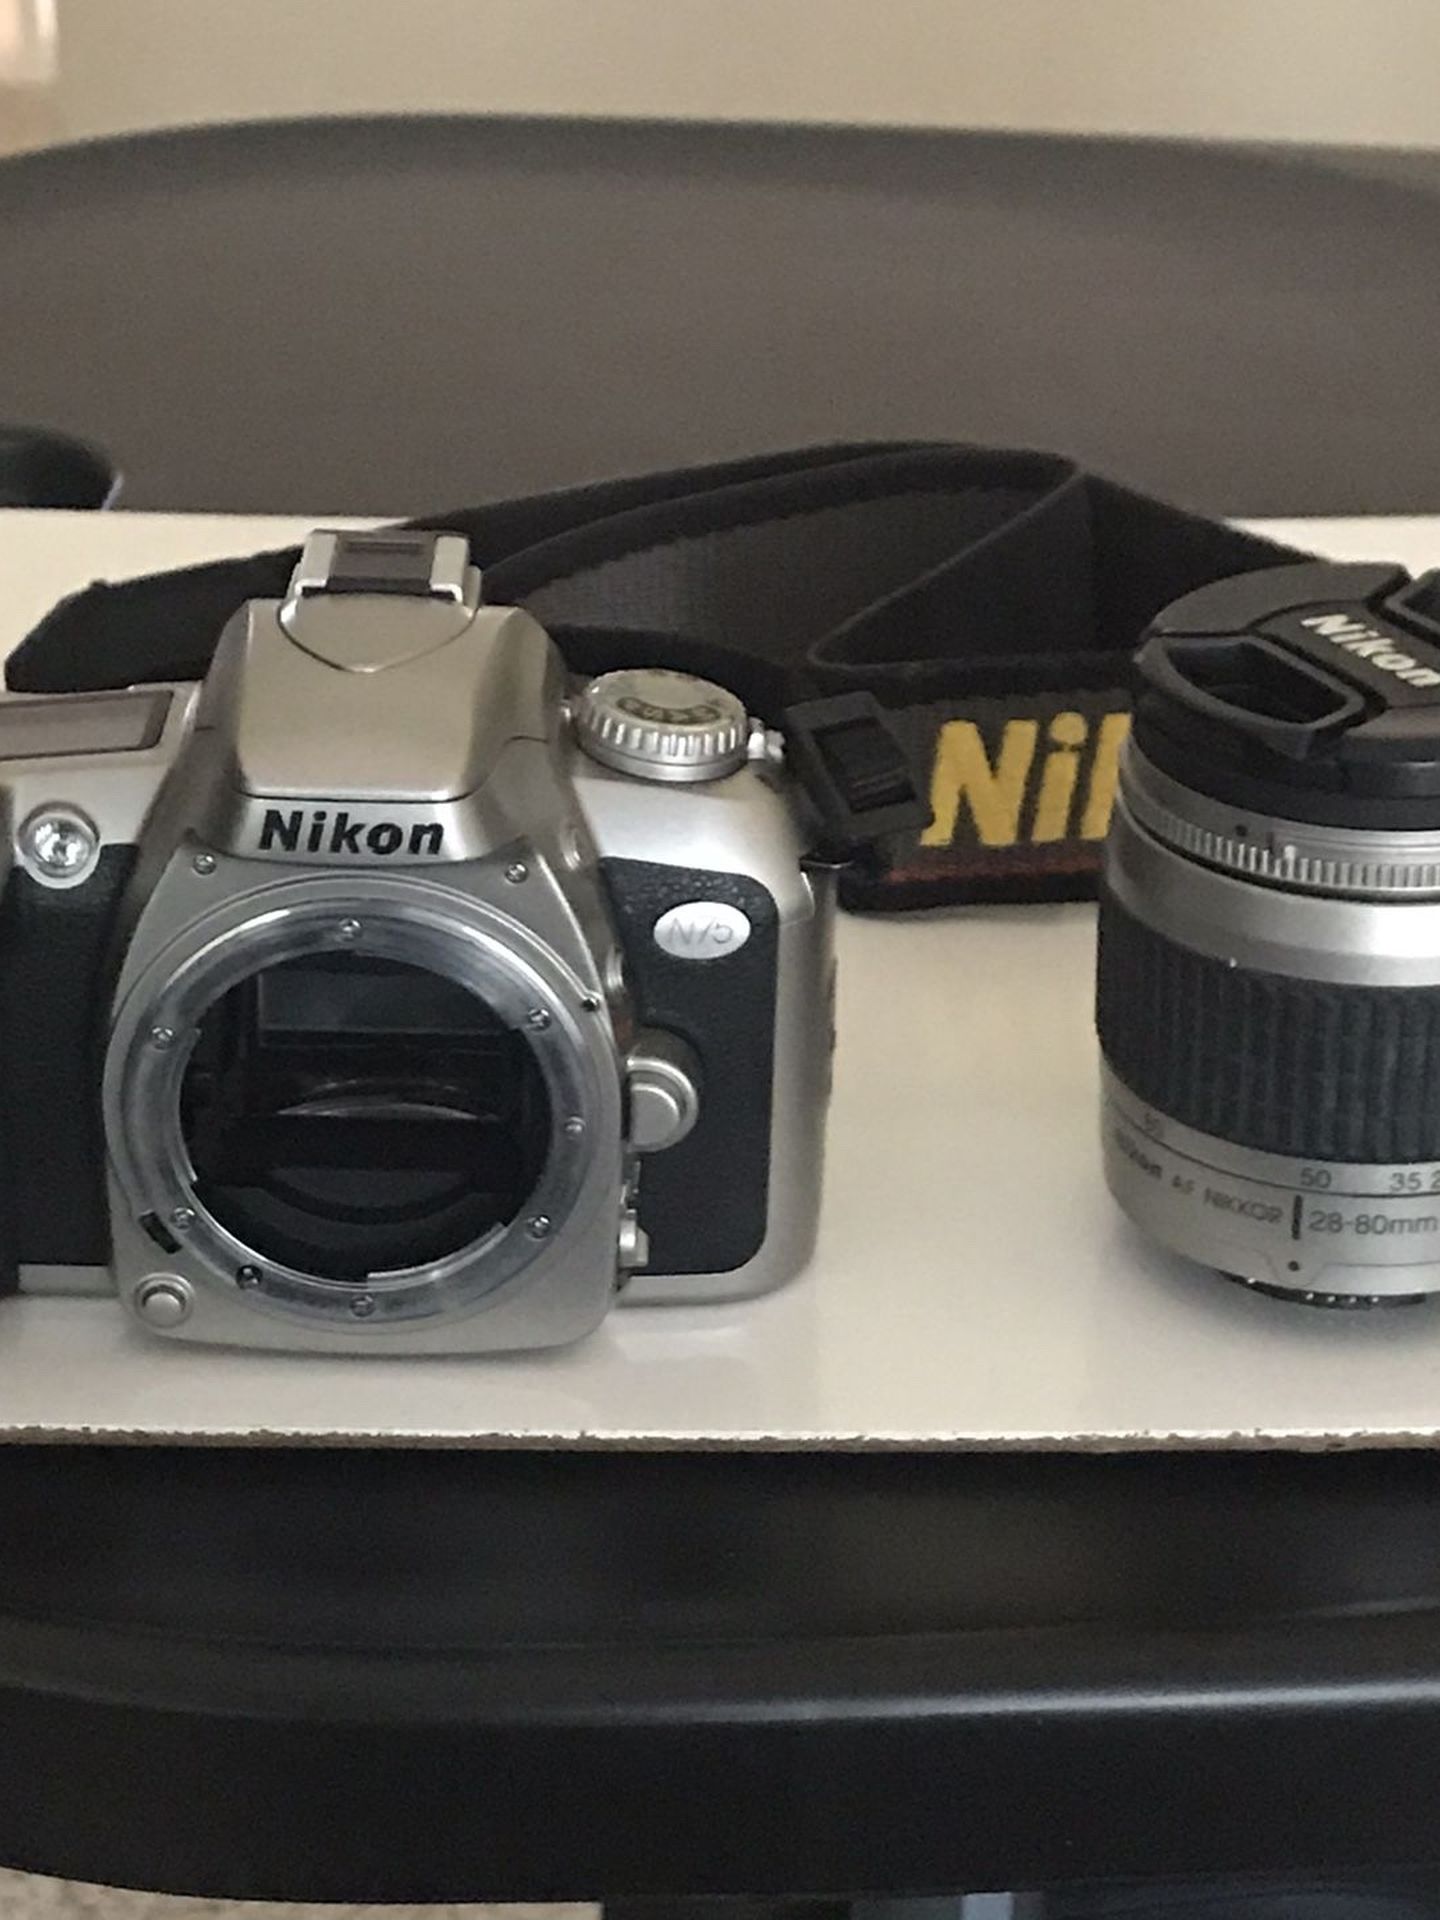 Nikon N75 35mm Camera w/28mm - 80mm f3.5 - 5.6 Nikki’s lens